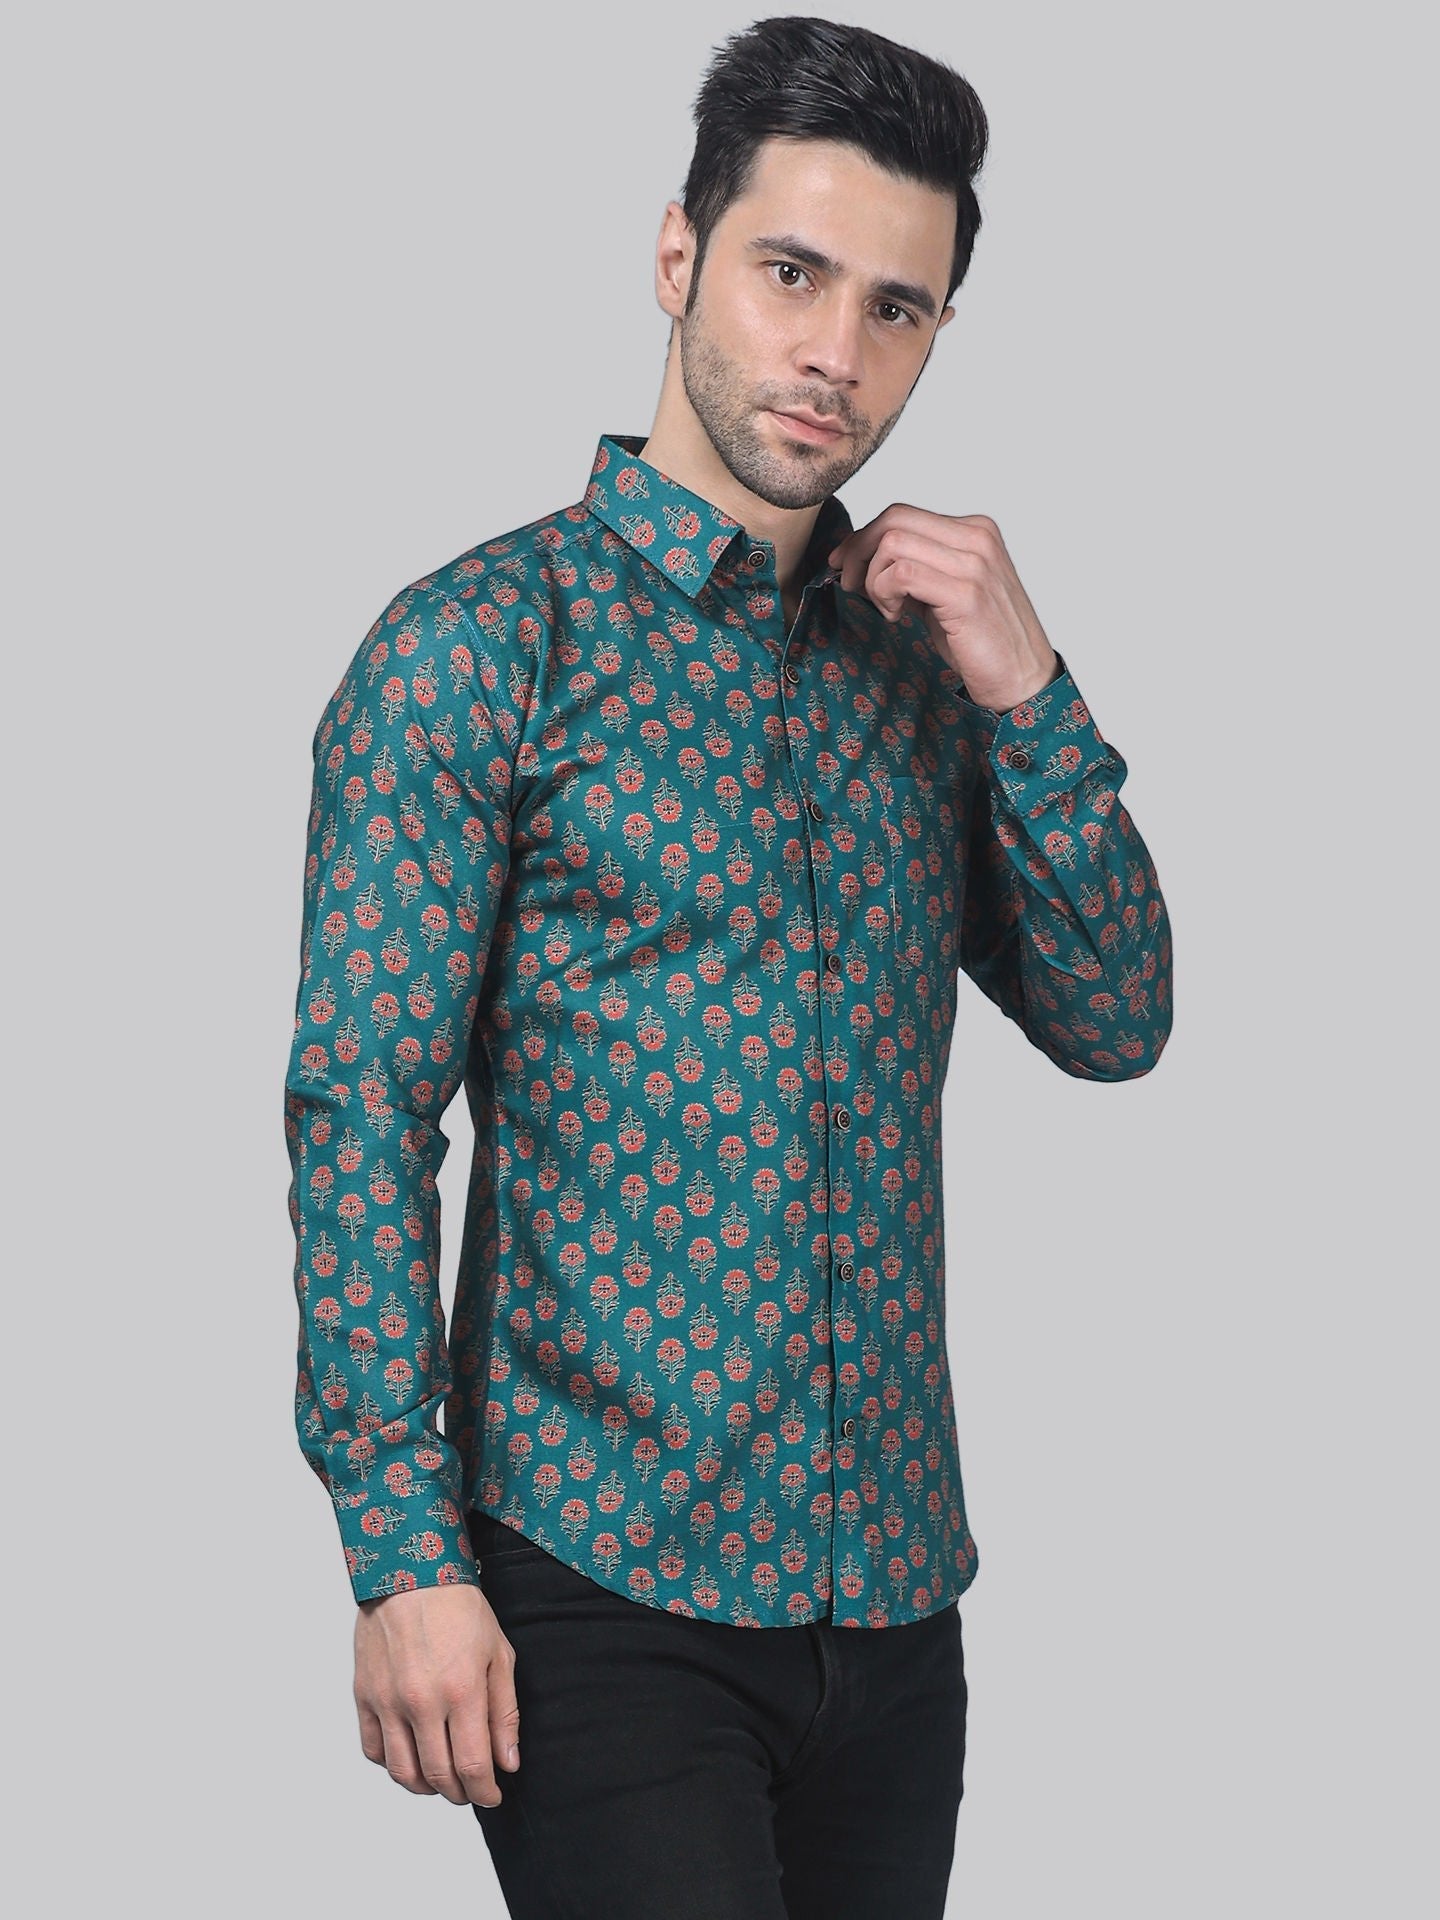 Artistic-modern Men's Printed Full Sleeve Casual Linen Shirt - TryBuy® USA🇺🇸